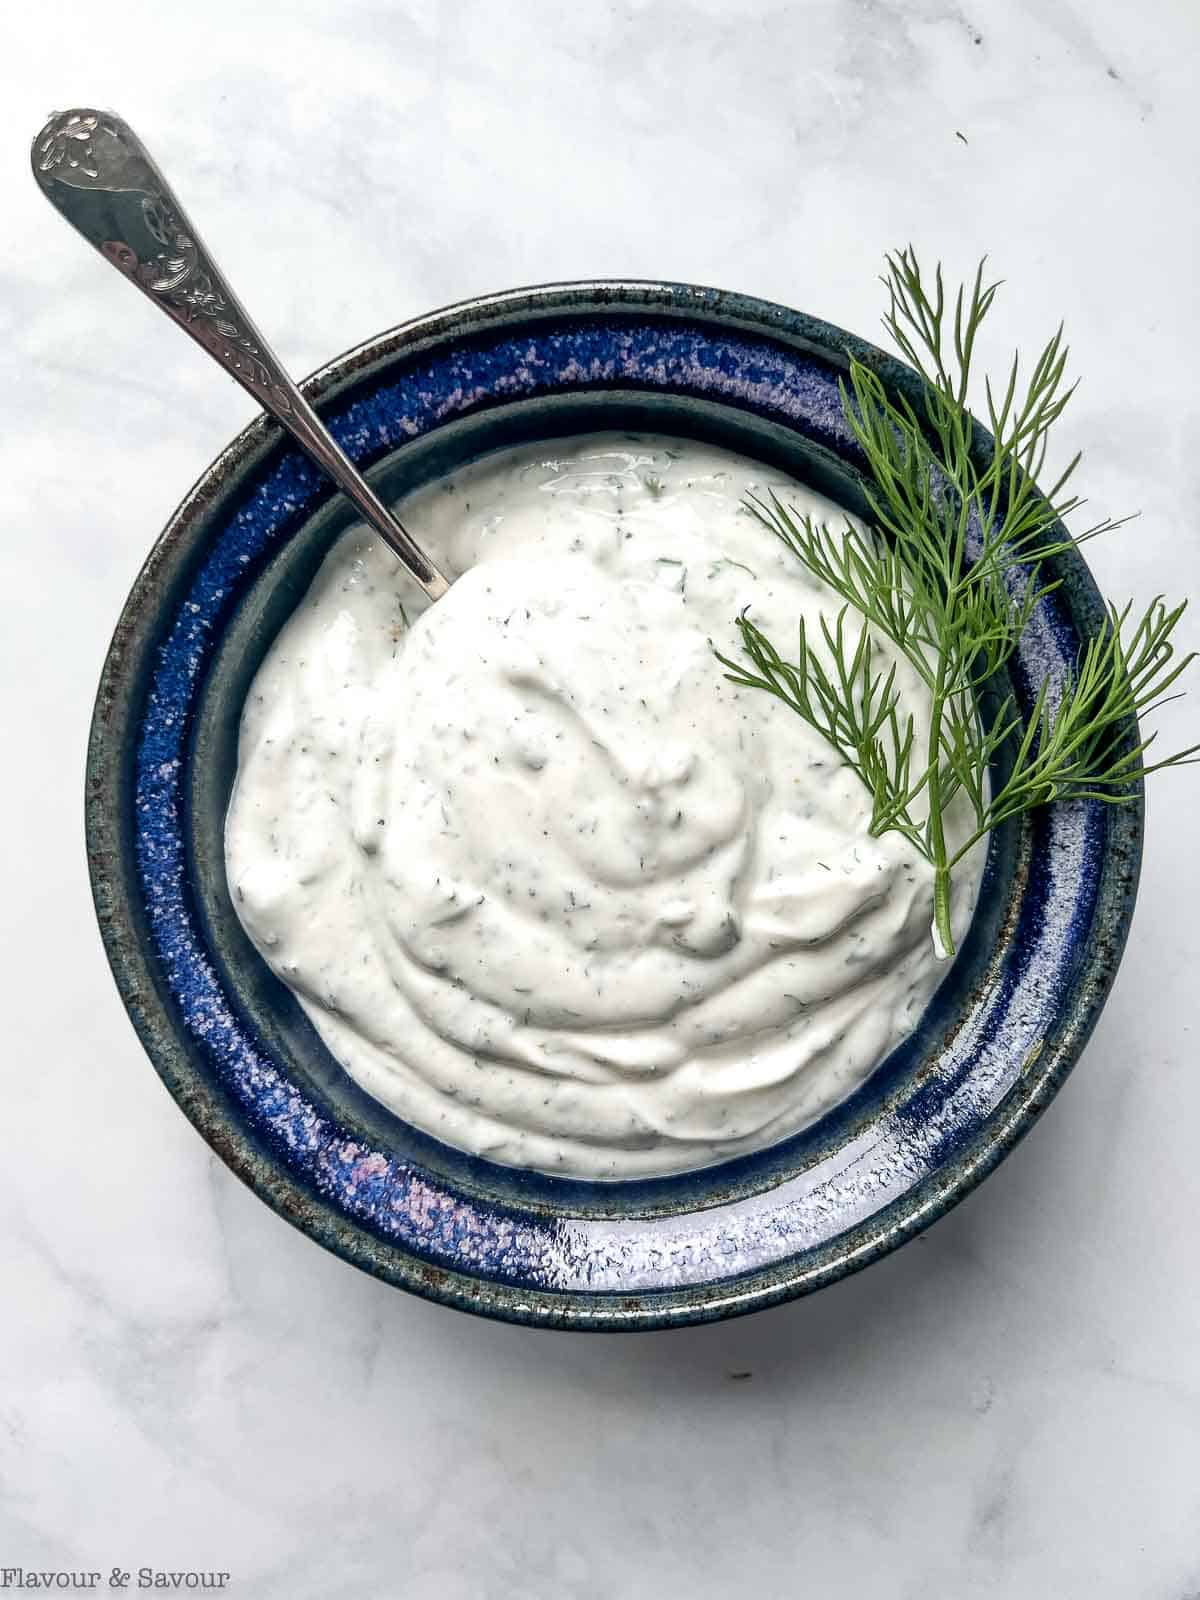 A bowl of Greek yogurt dill dip with a sprig of fresh dill.